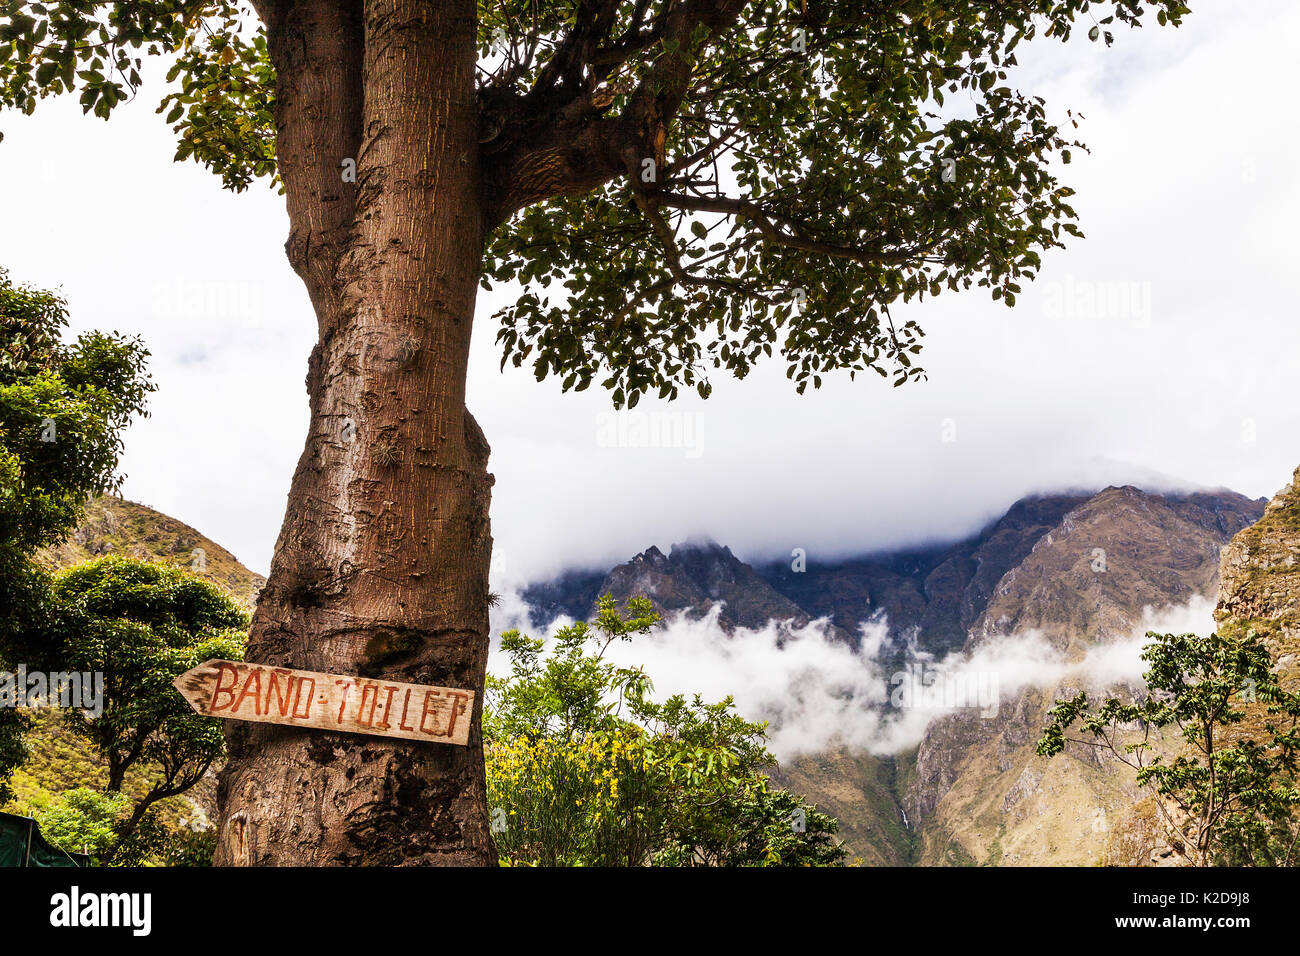 Bano, wc Schild auf dem Inka Trail, Peru. Dezember 2013. Stockfoto